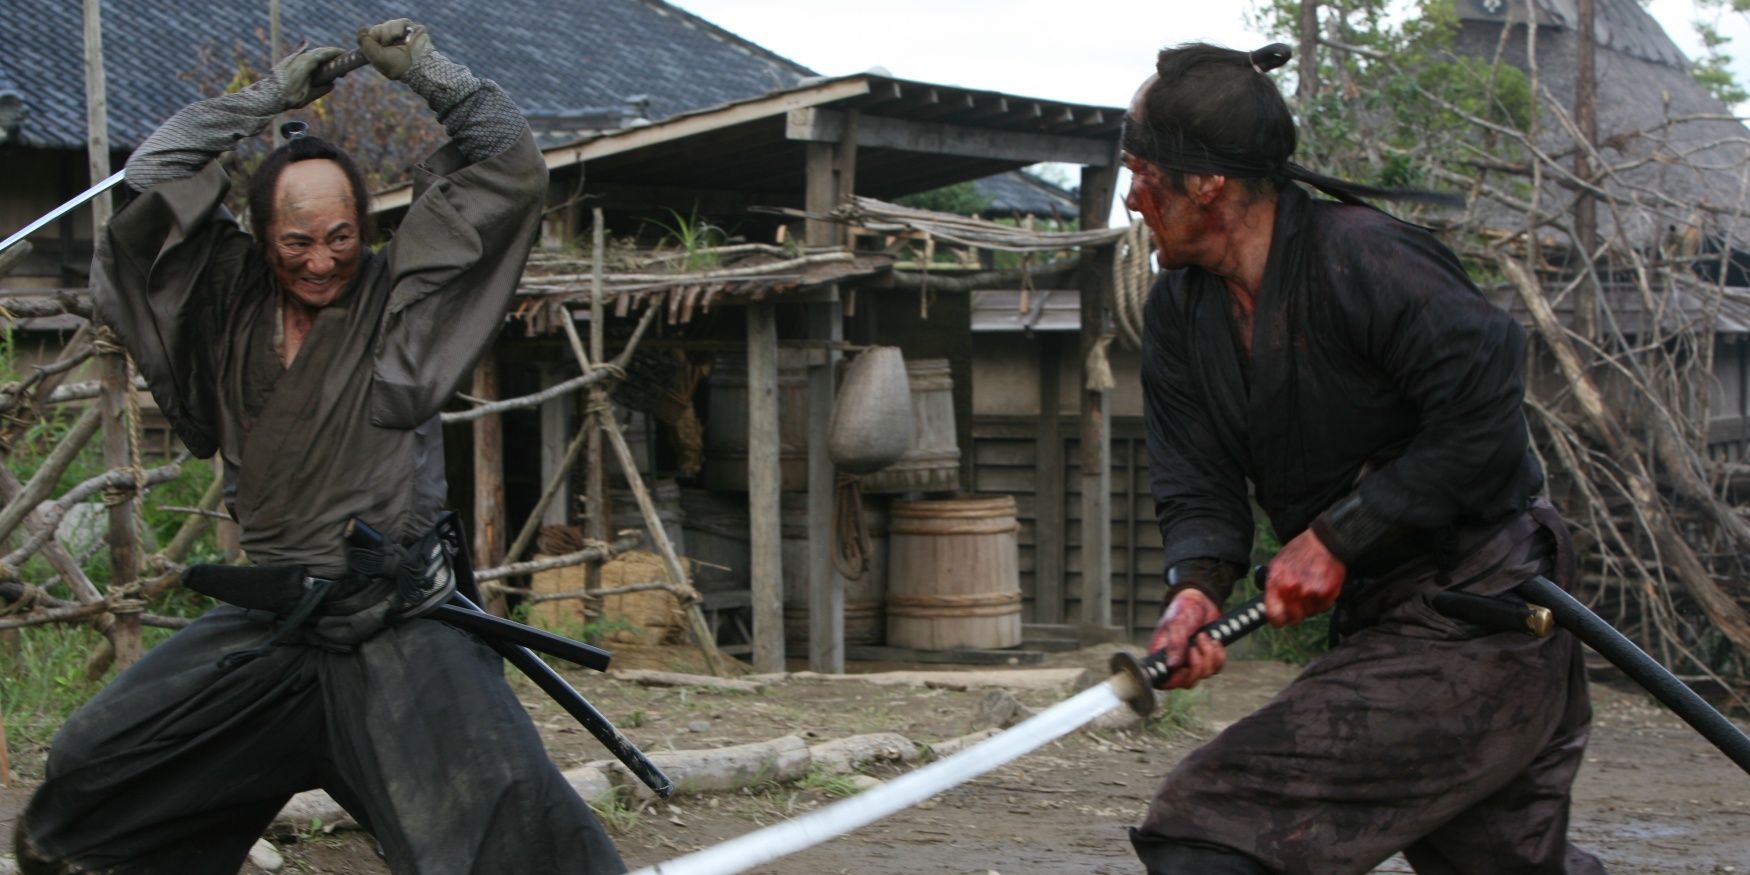 Two samurais have a swordfight